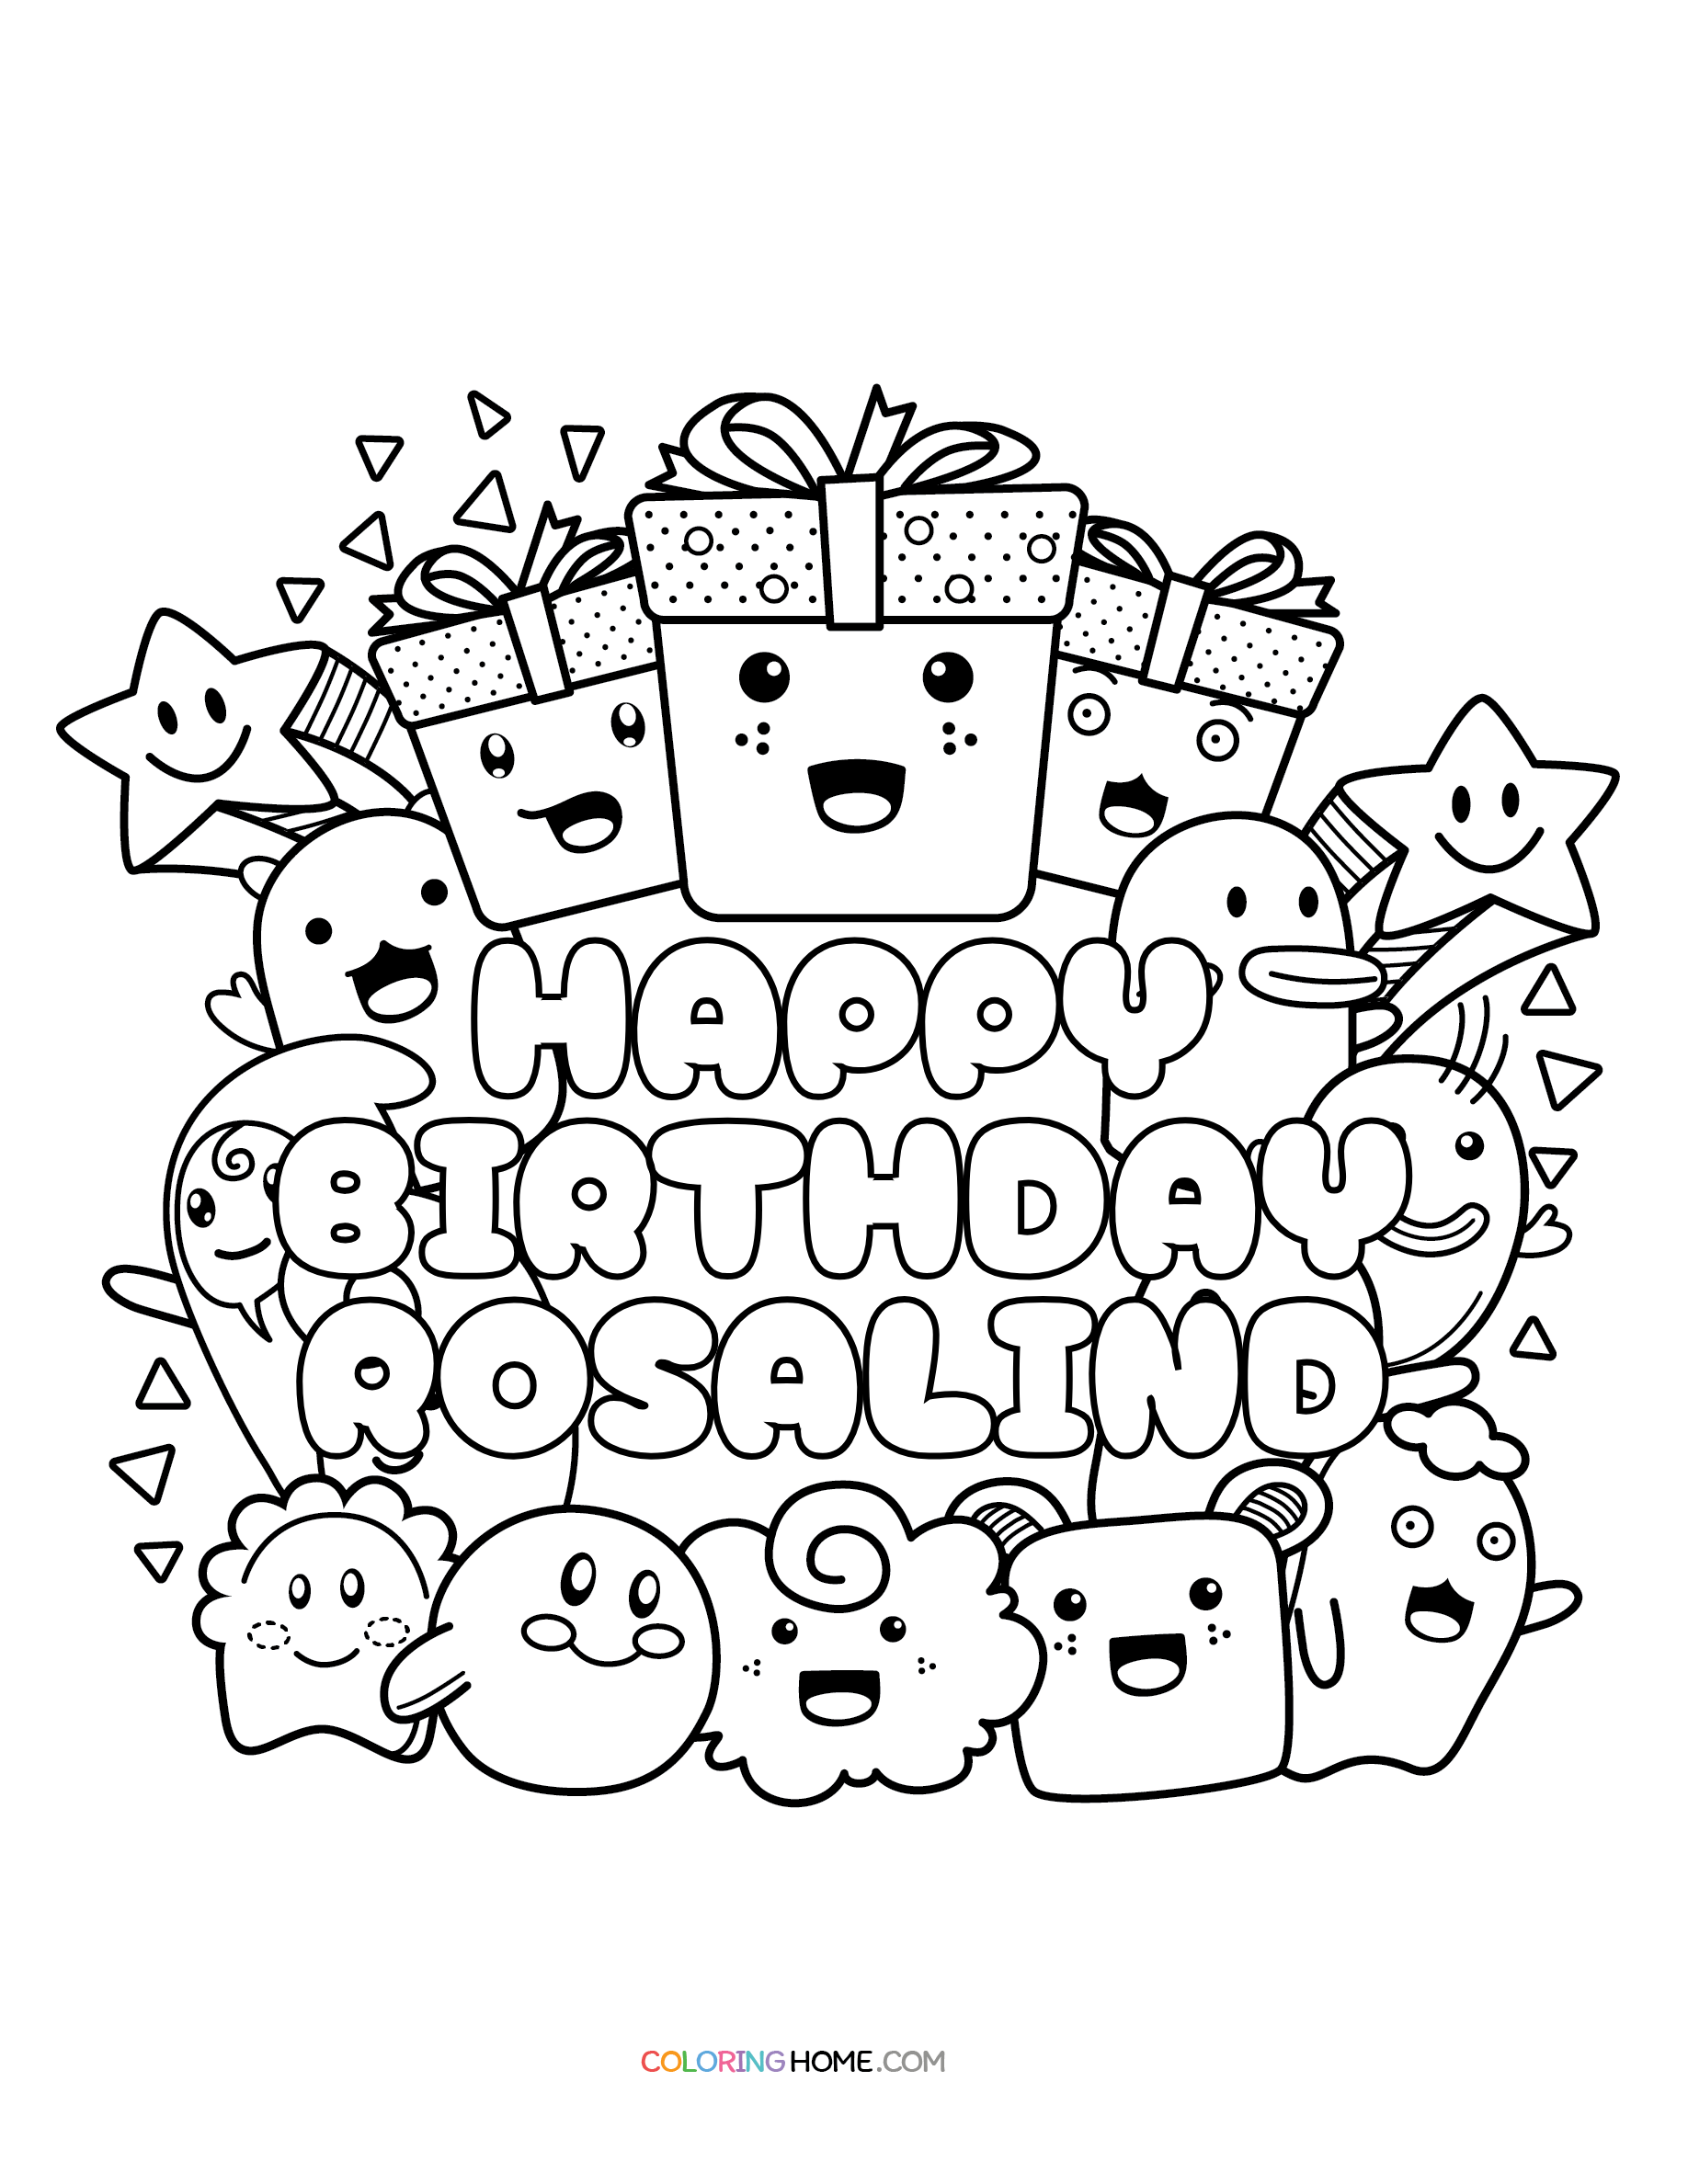 Happy Birthday Rosalind coloring page